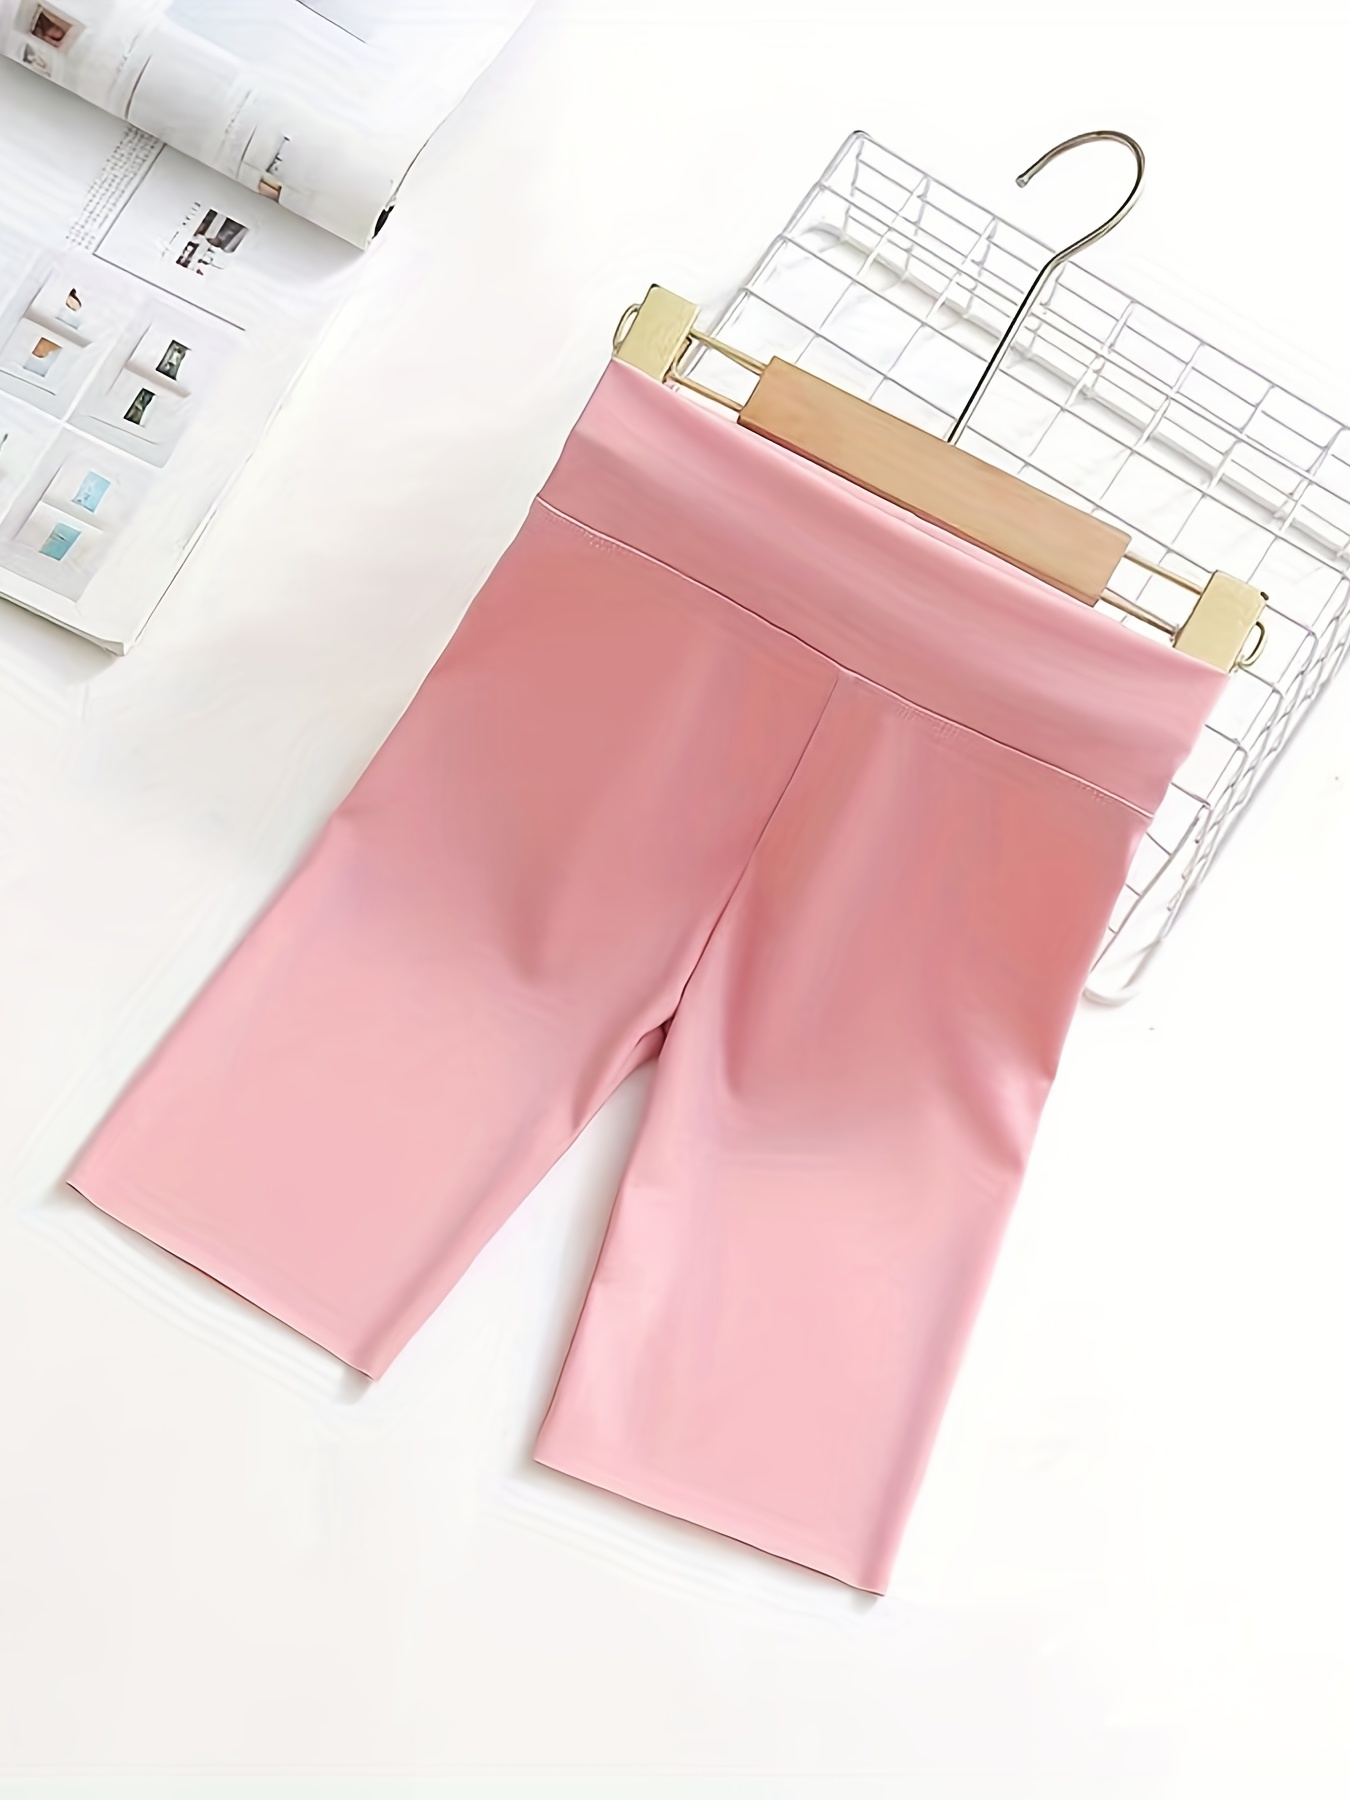 New Summer Women's Soft Comfortable Pants Fashion Ladies Short